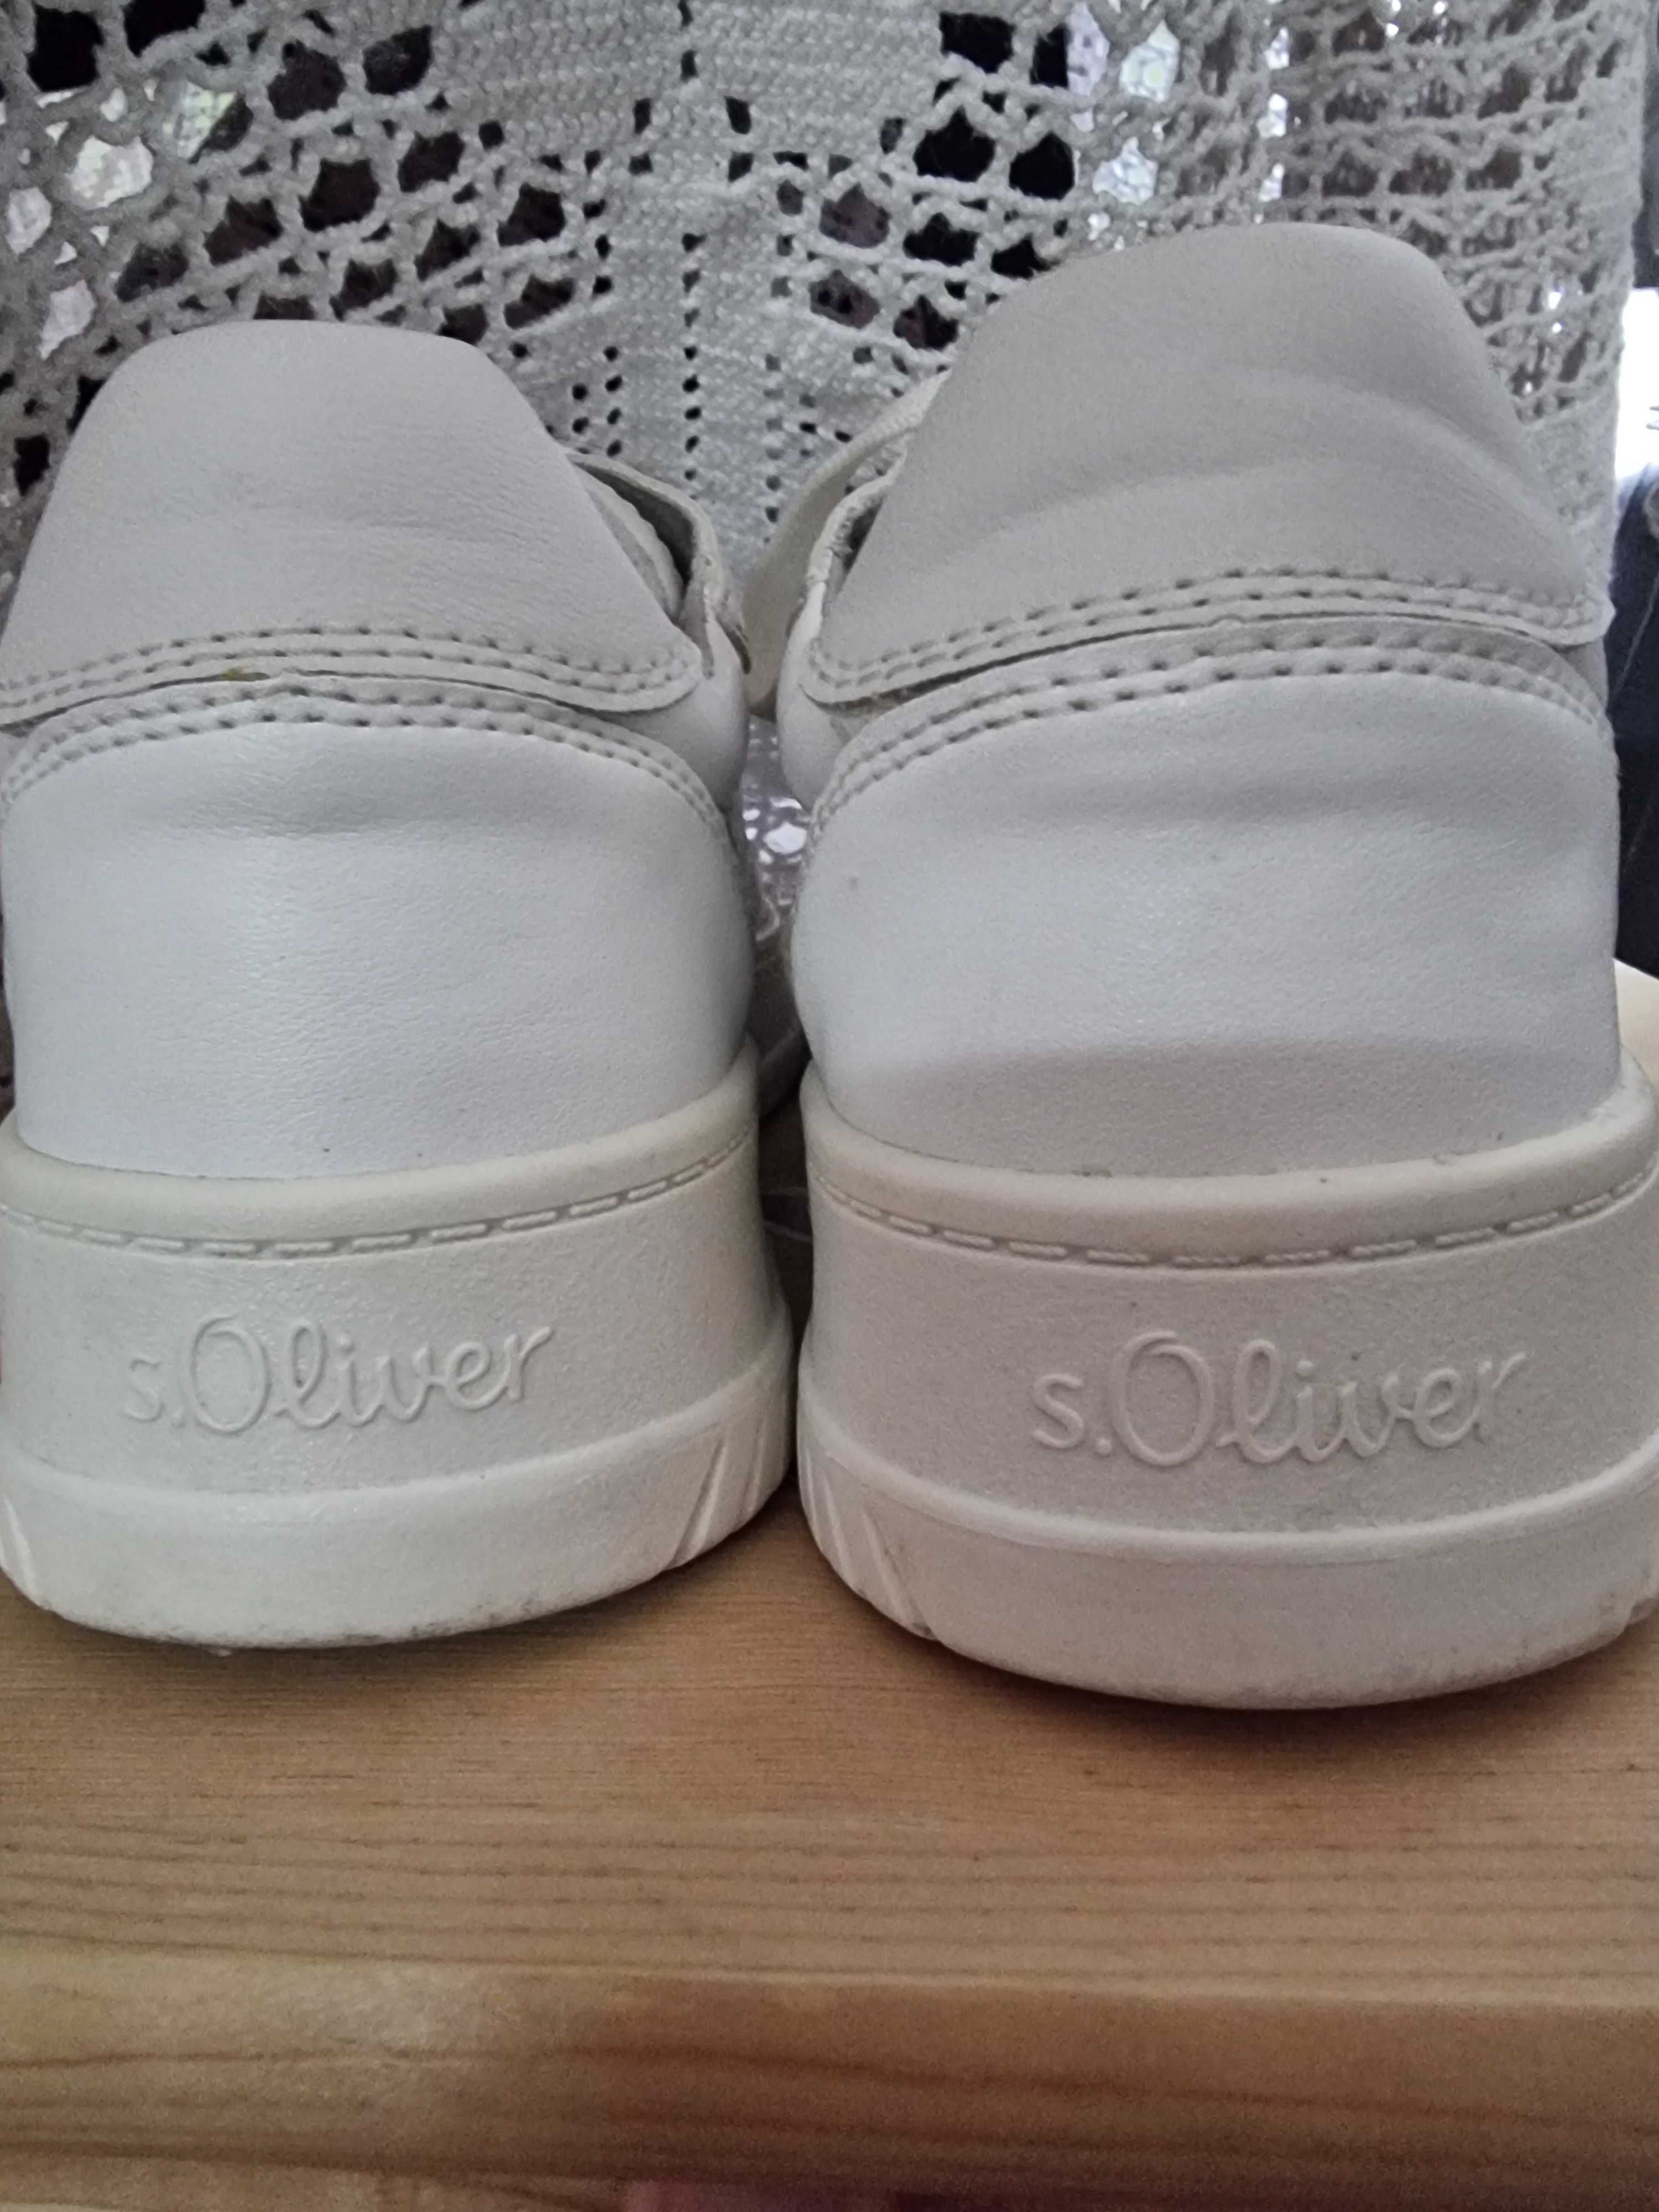 s'Olivier обувки цвят: бял 40 номер, стелка 26 см